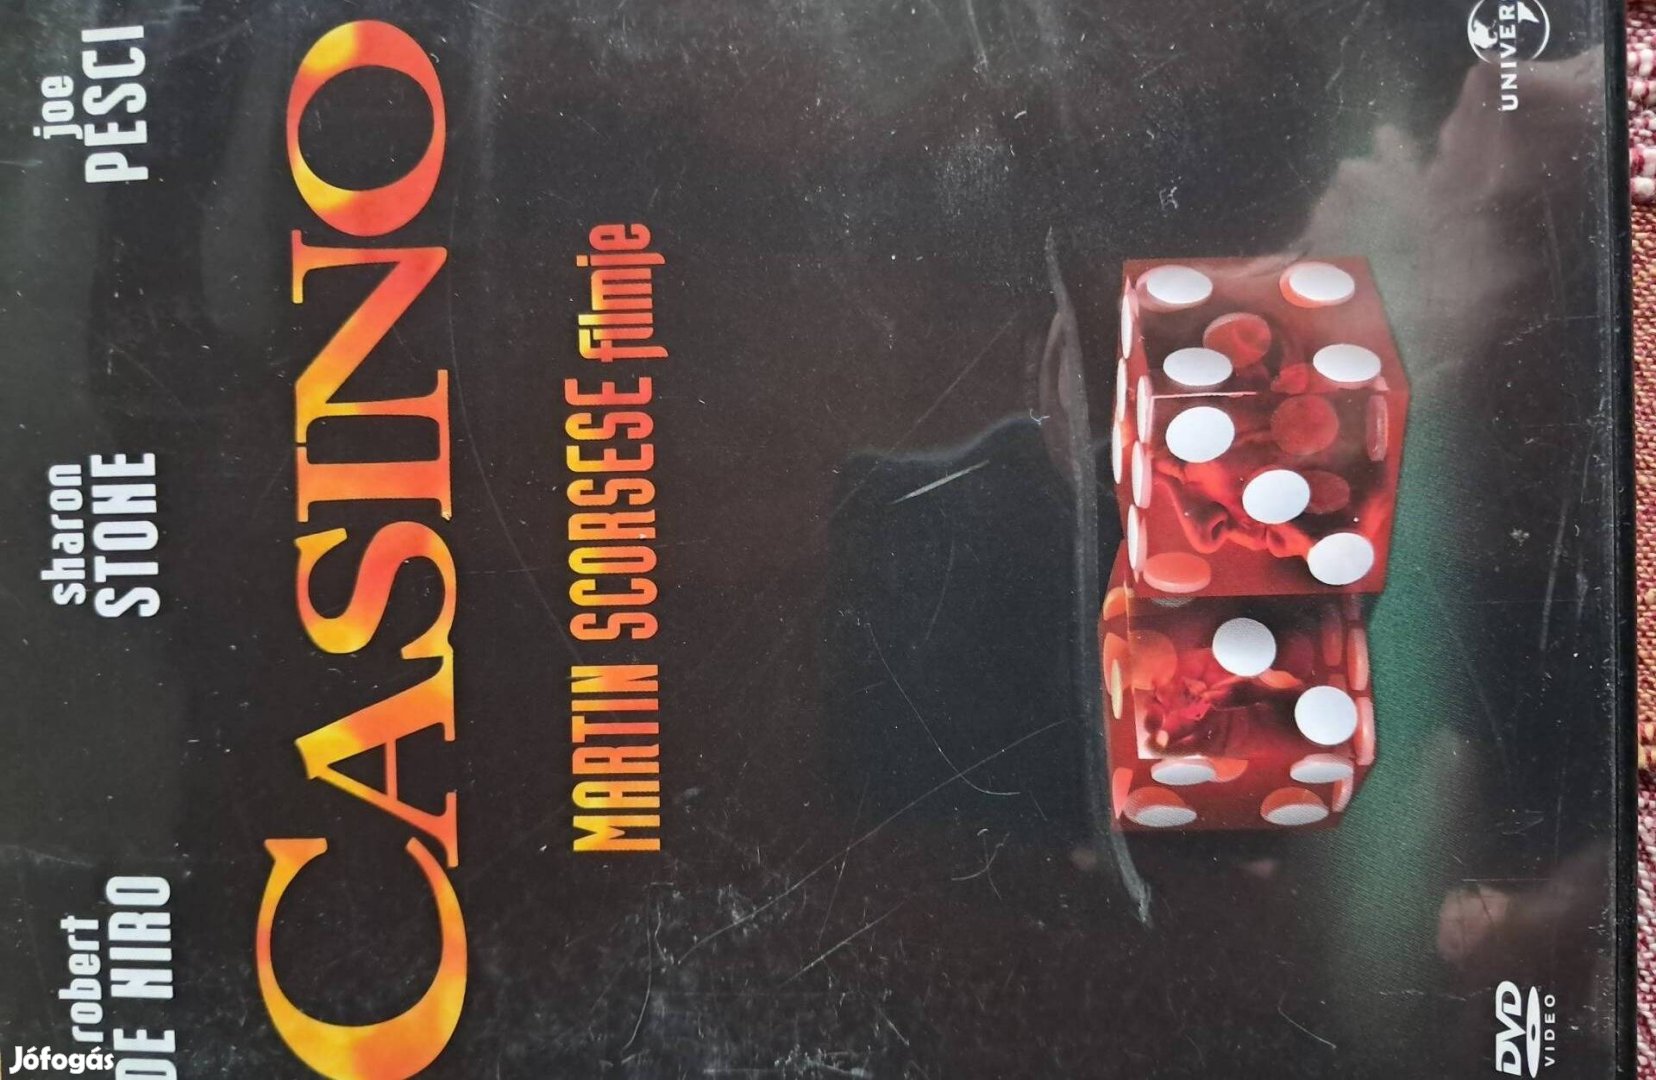 Casino Martin Scorsese Filmje